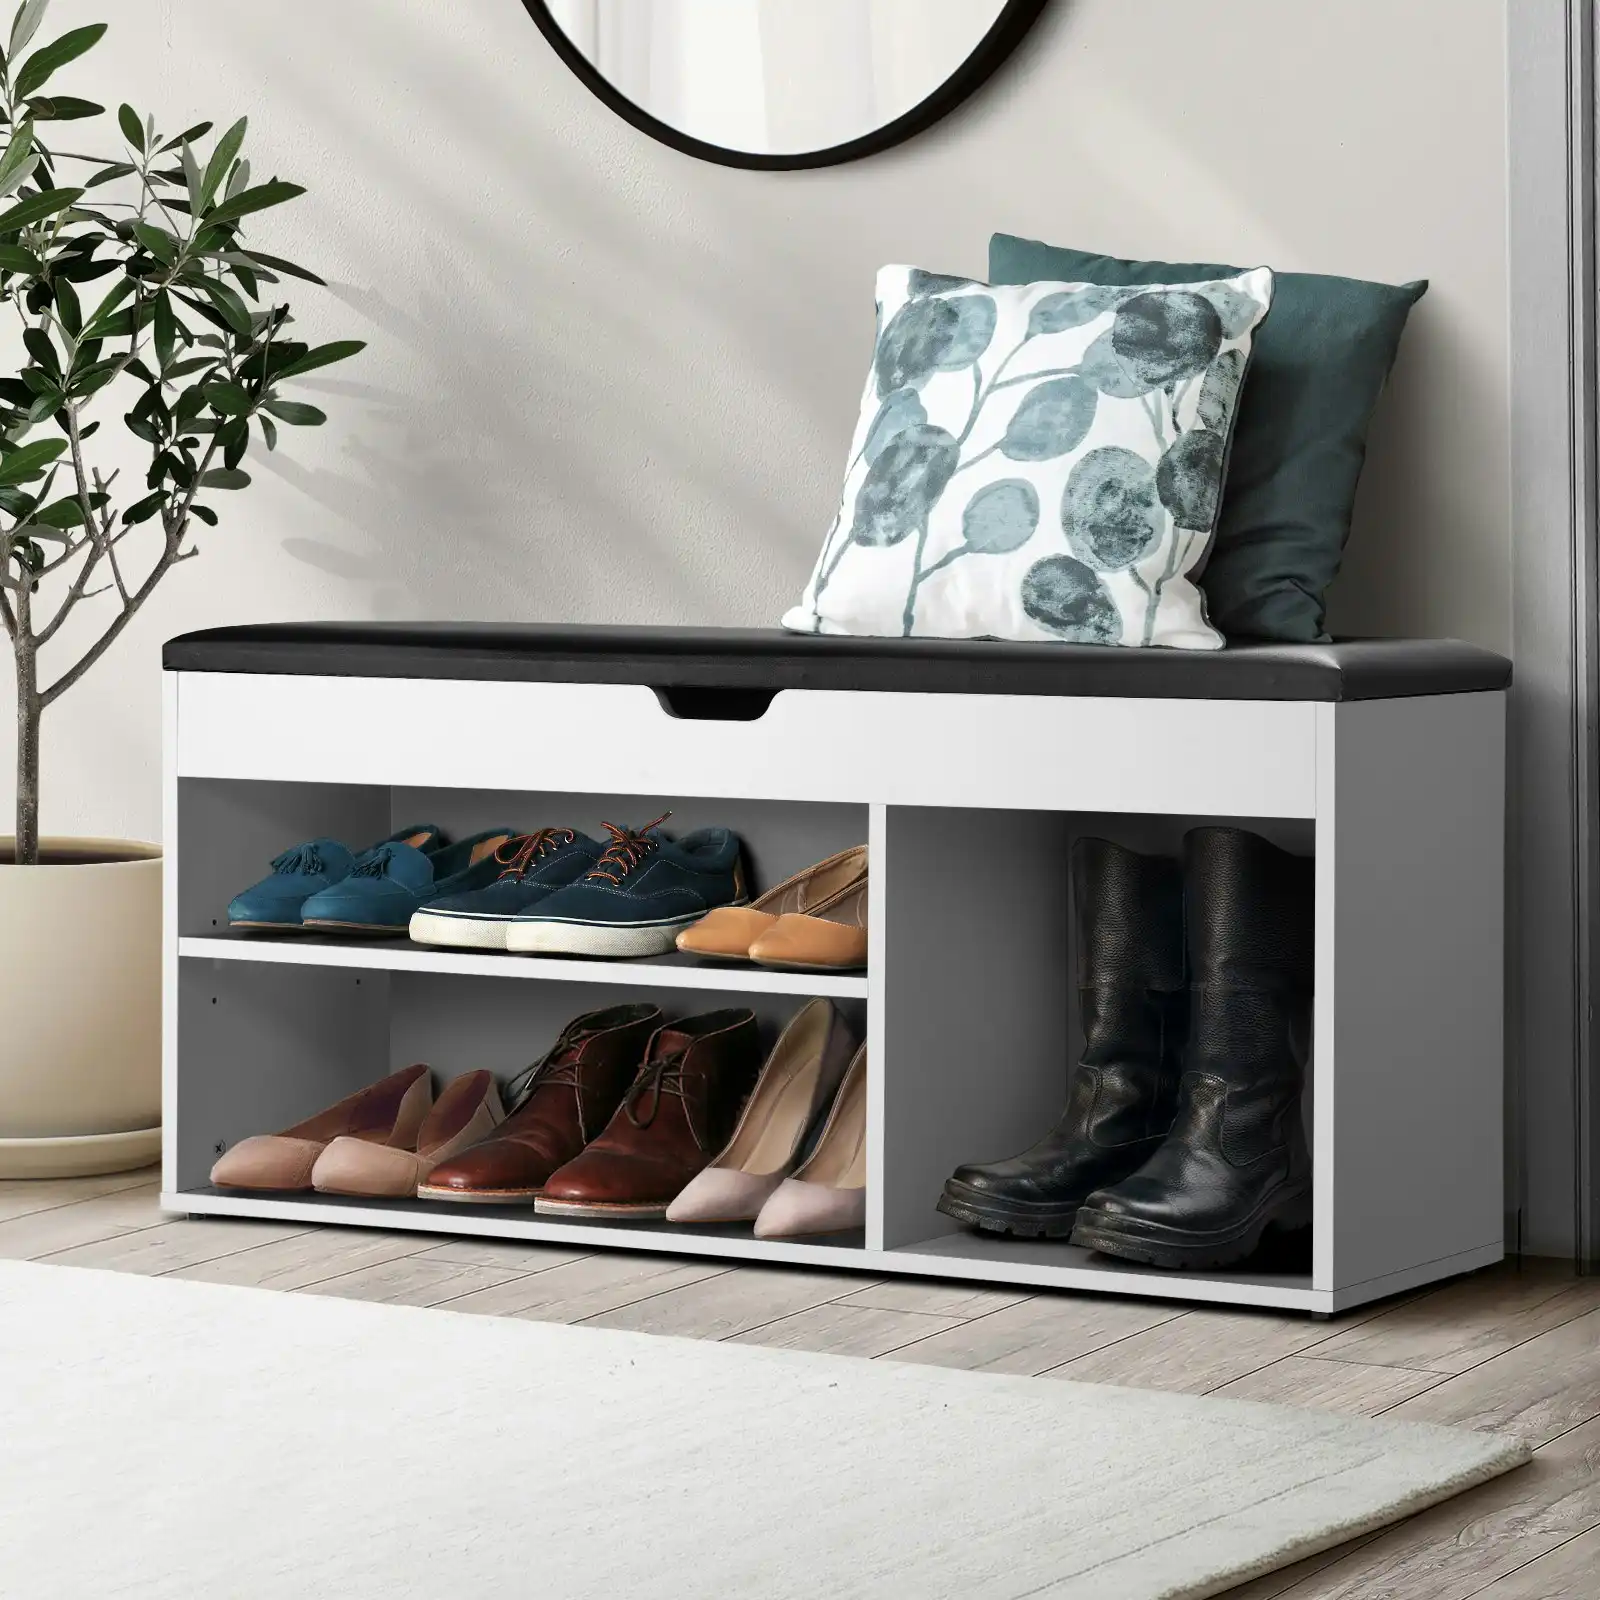 Oikiture Shoe Cabinet Bench Shoe Storage Rack PU Padded Seat Organiser Shelf